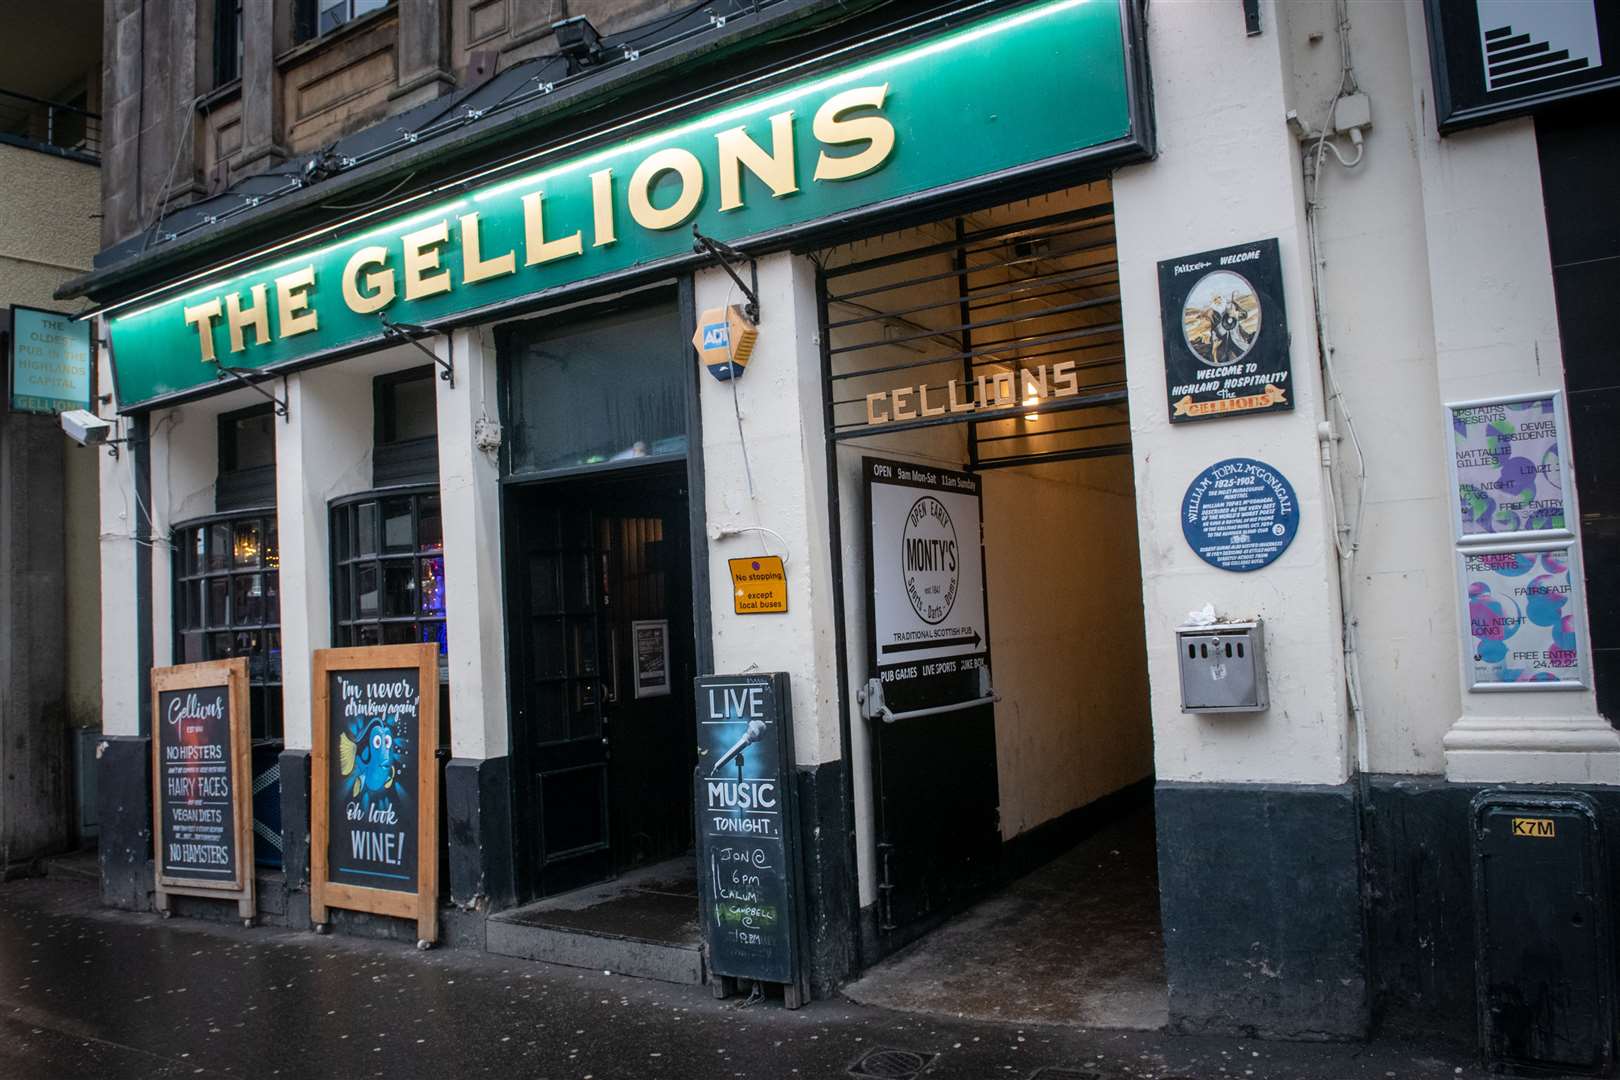 The Gellions.